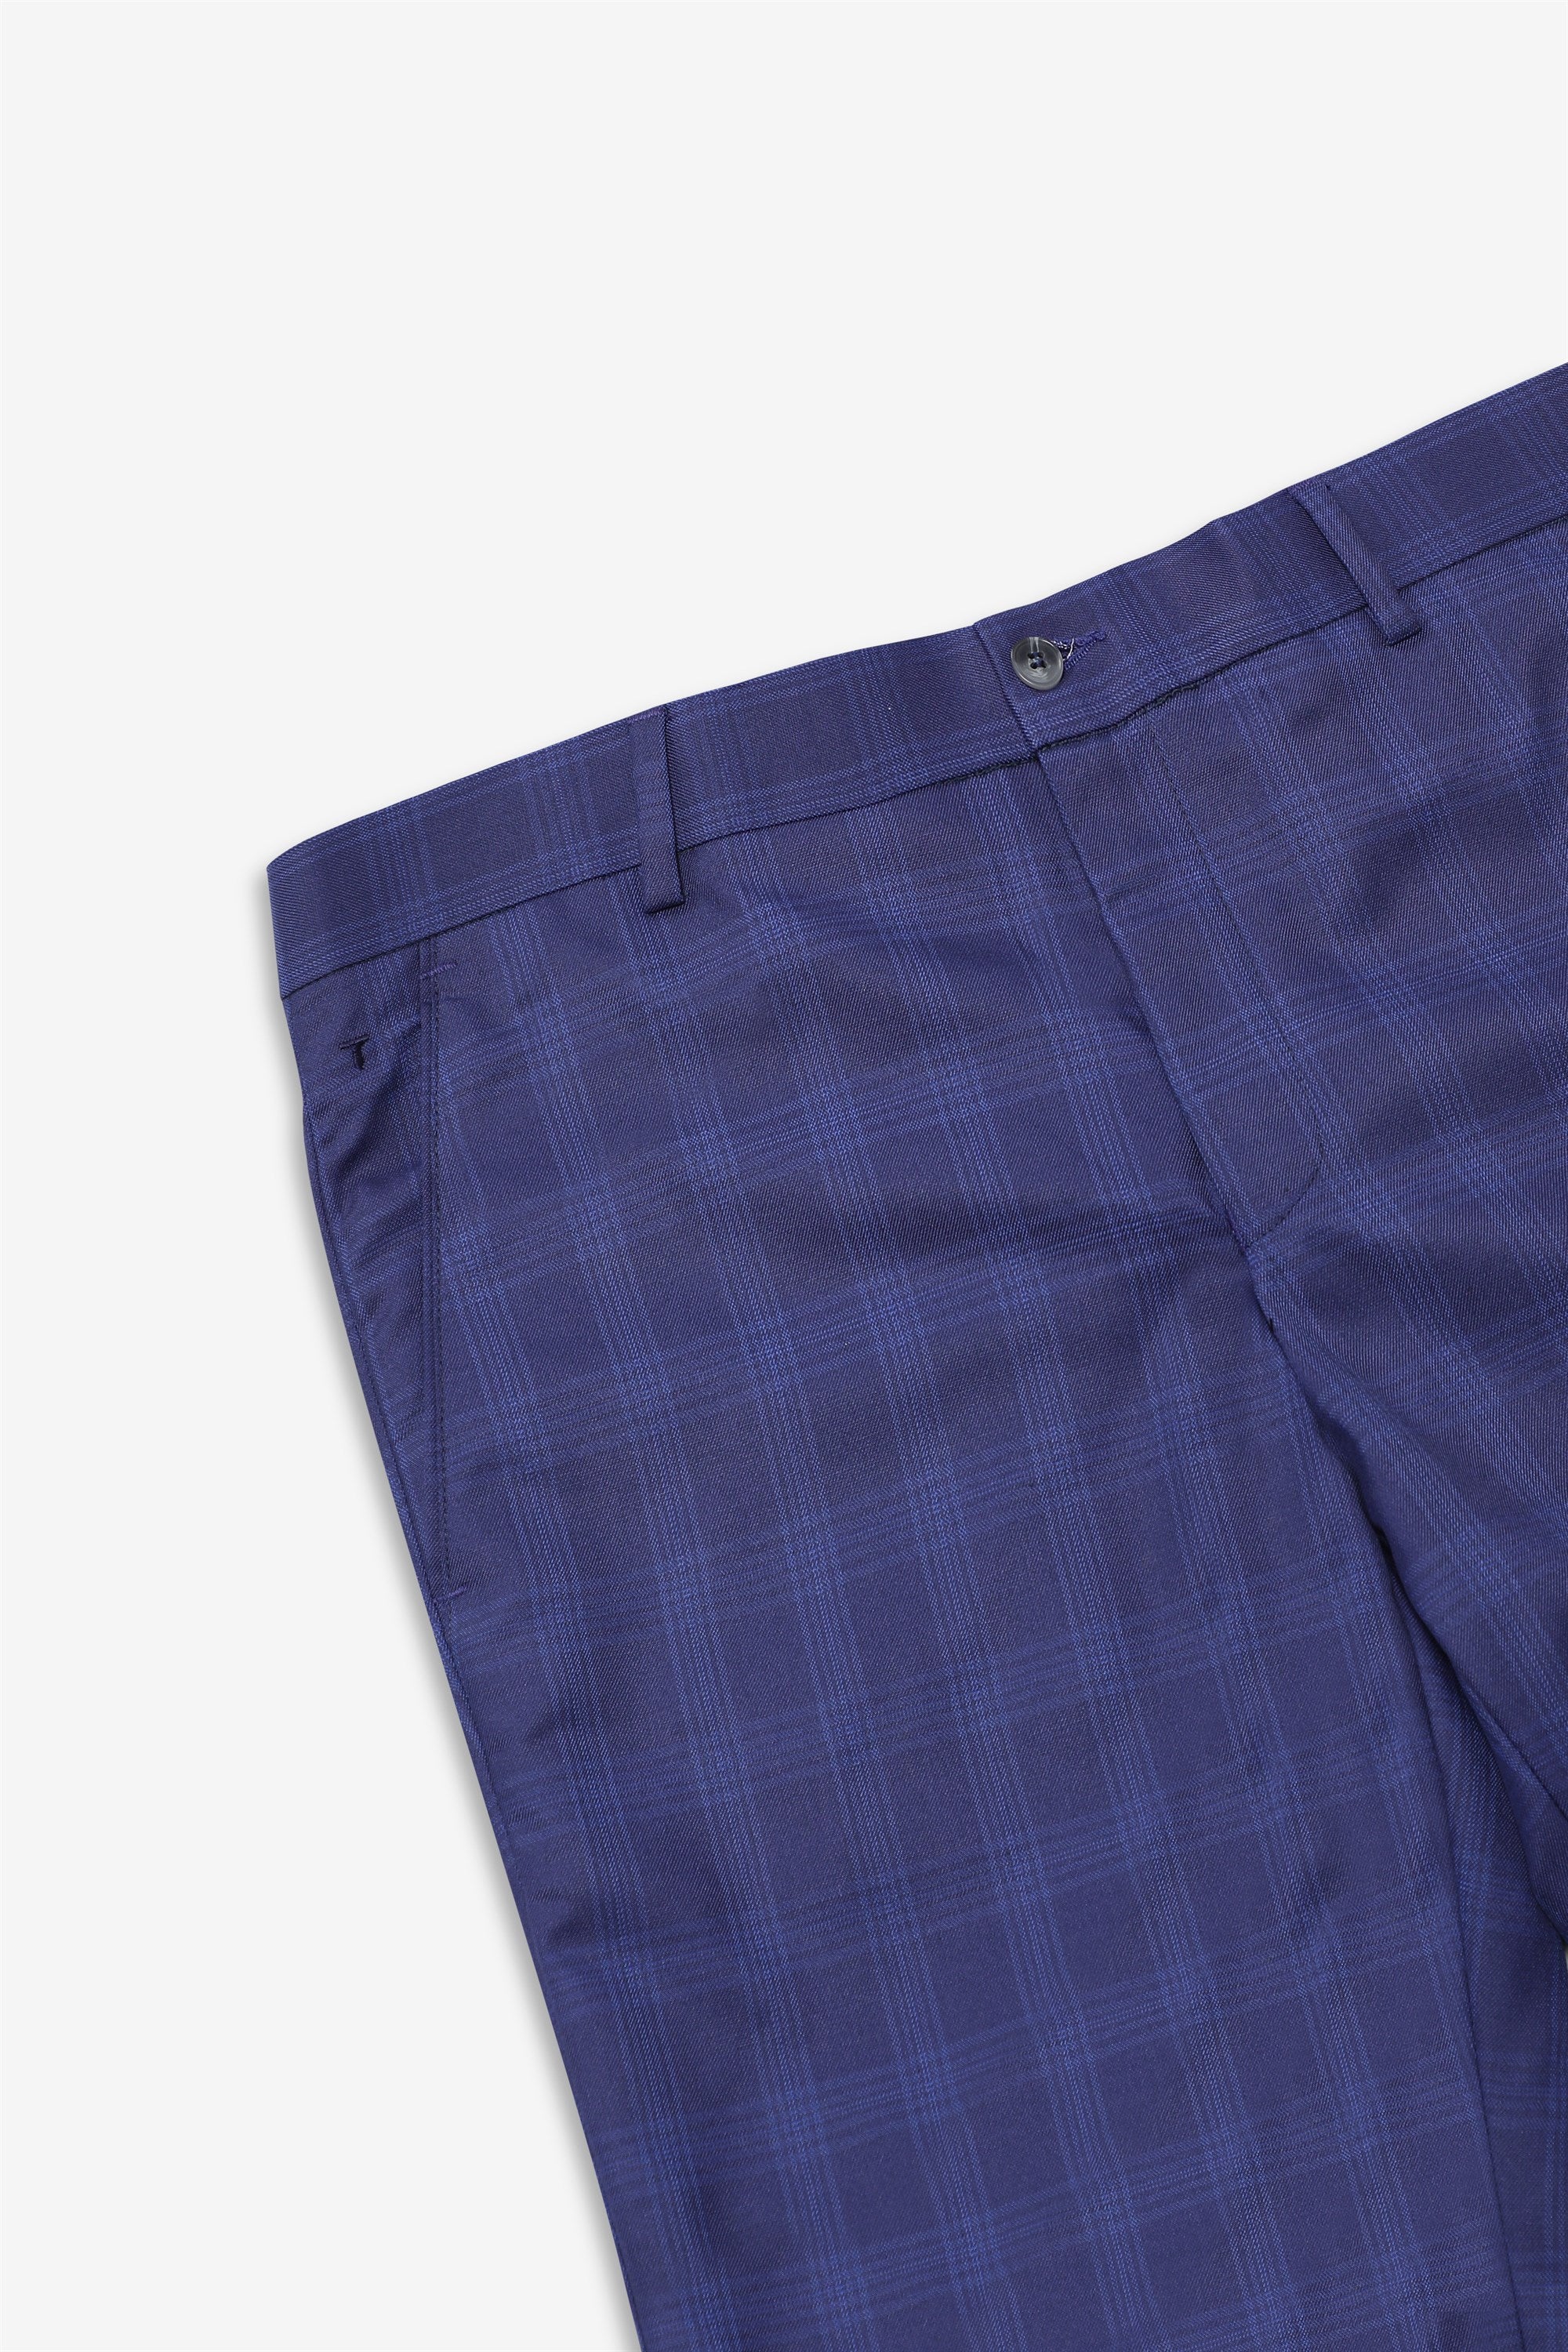 Black  Navy Blue Checked Cotton Trousers  shagun designs